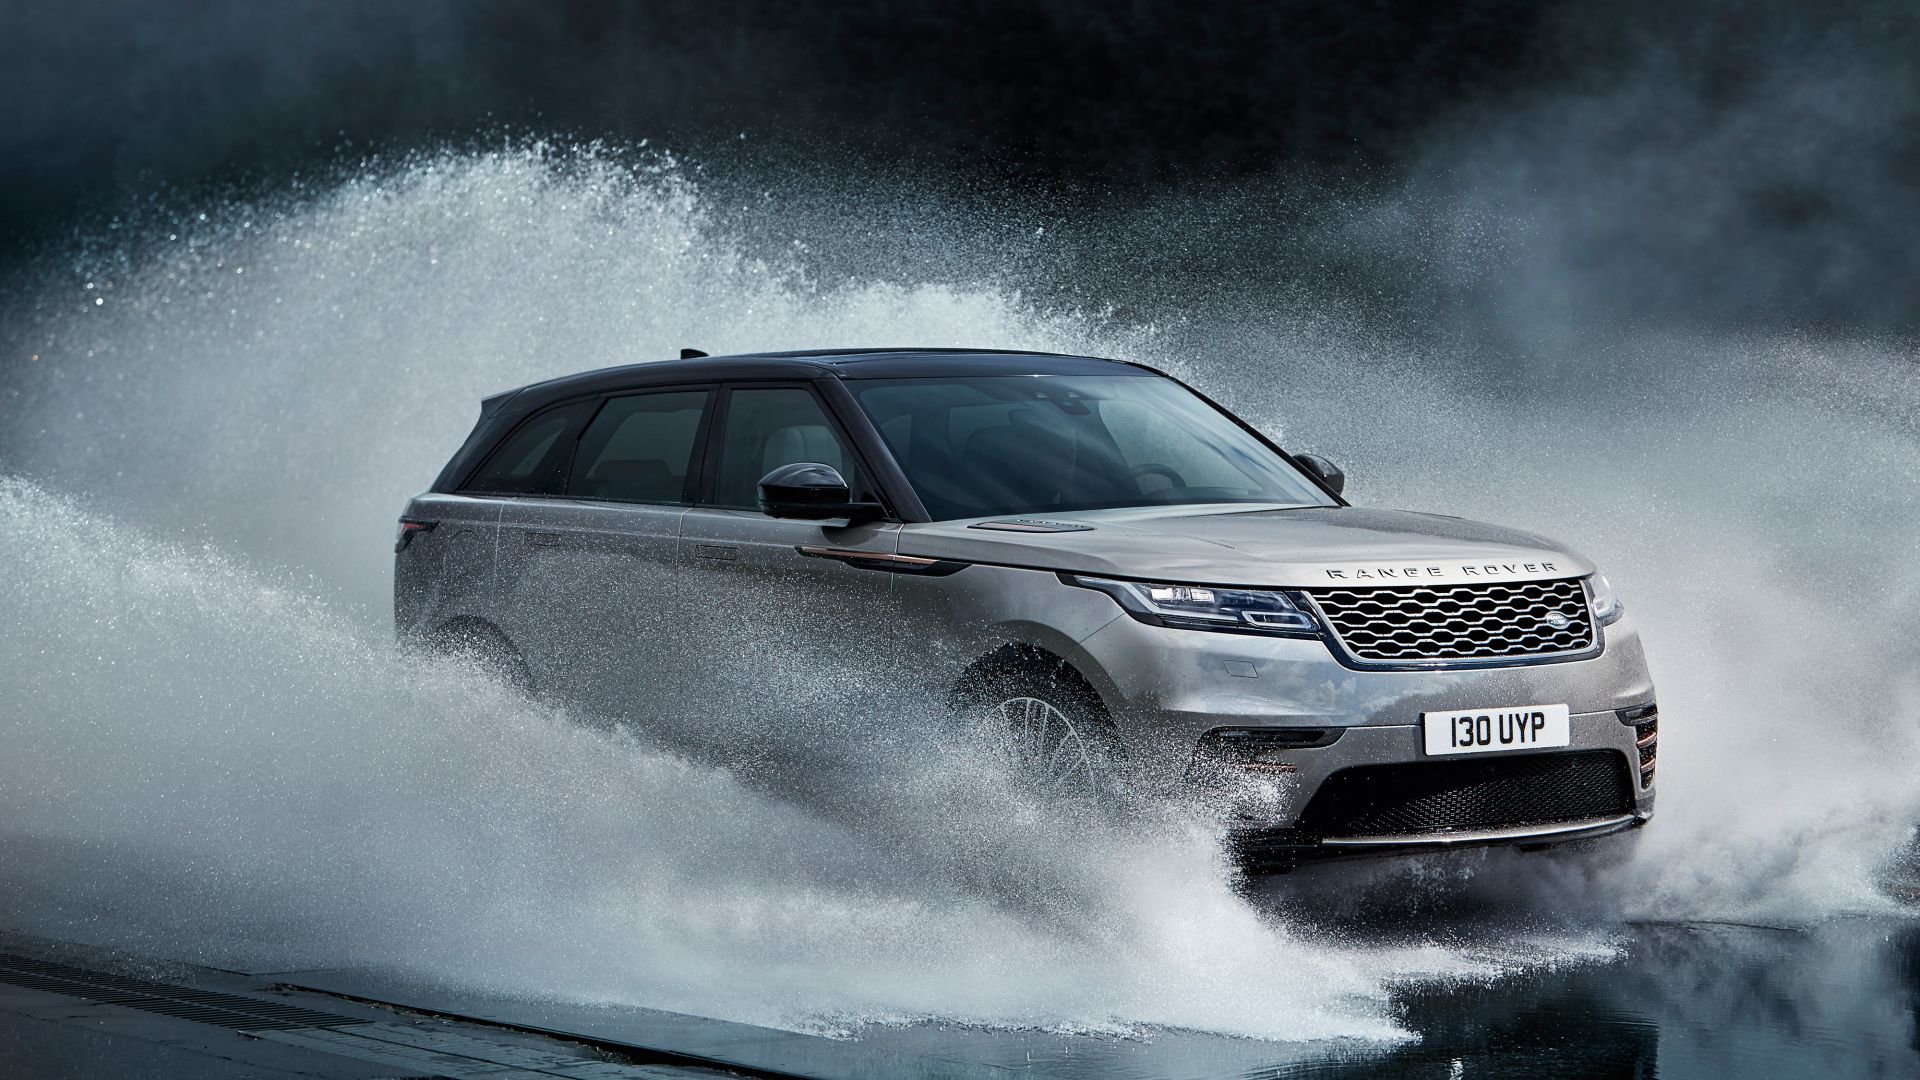 Wallpaper Silver Range Rover Velar, luxury SUV car, water splashes